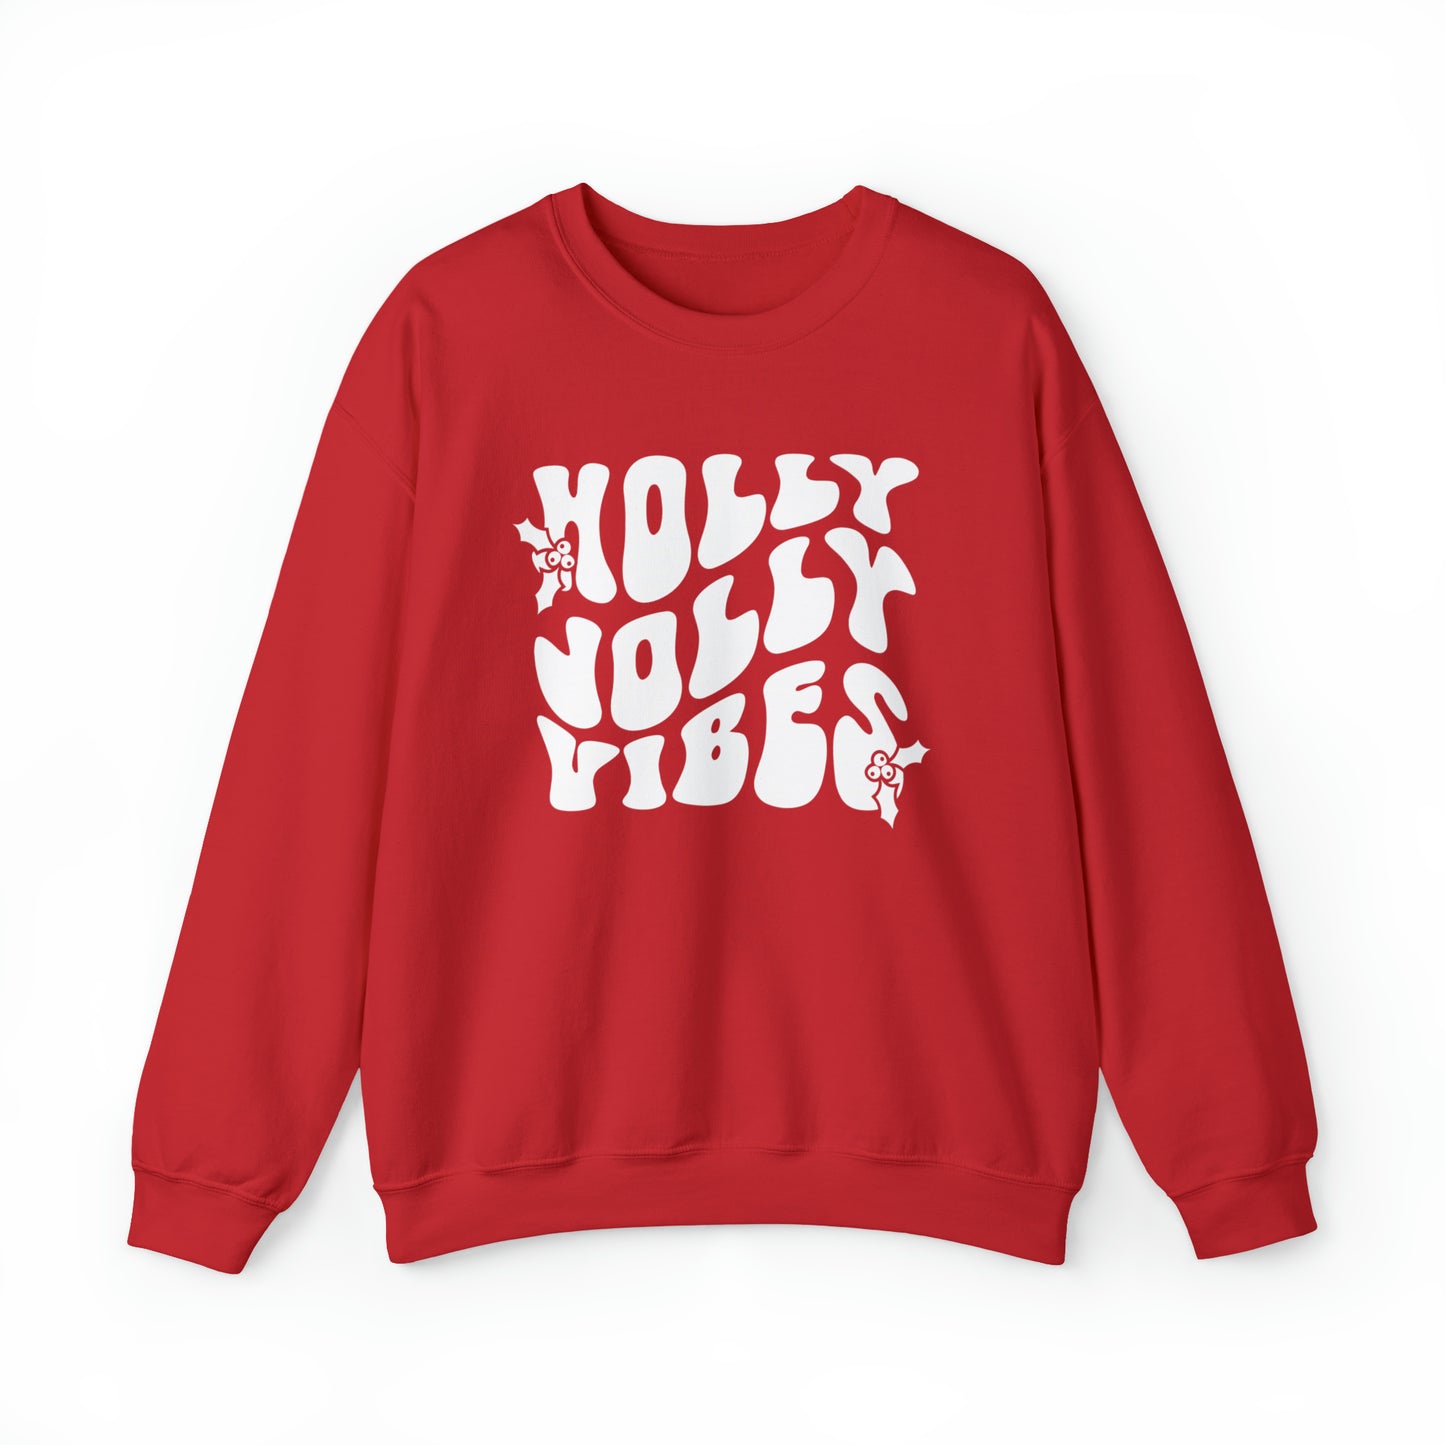 Retro Holly Jolly Vibes Christmas Crewneck Sweater